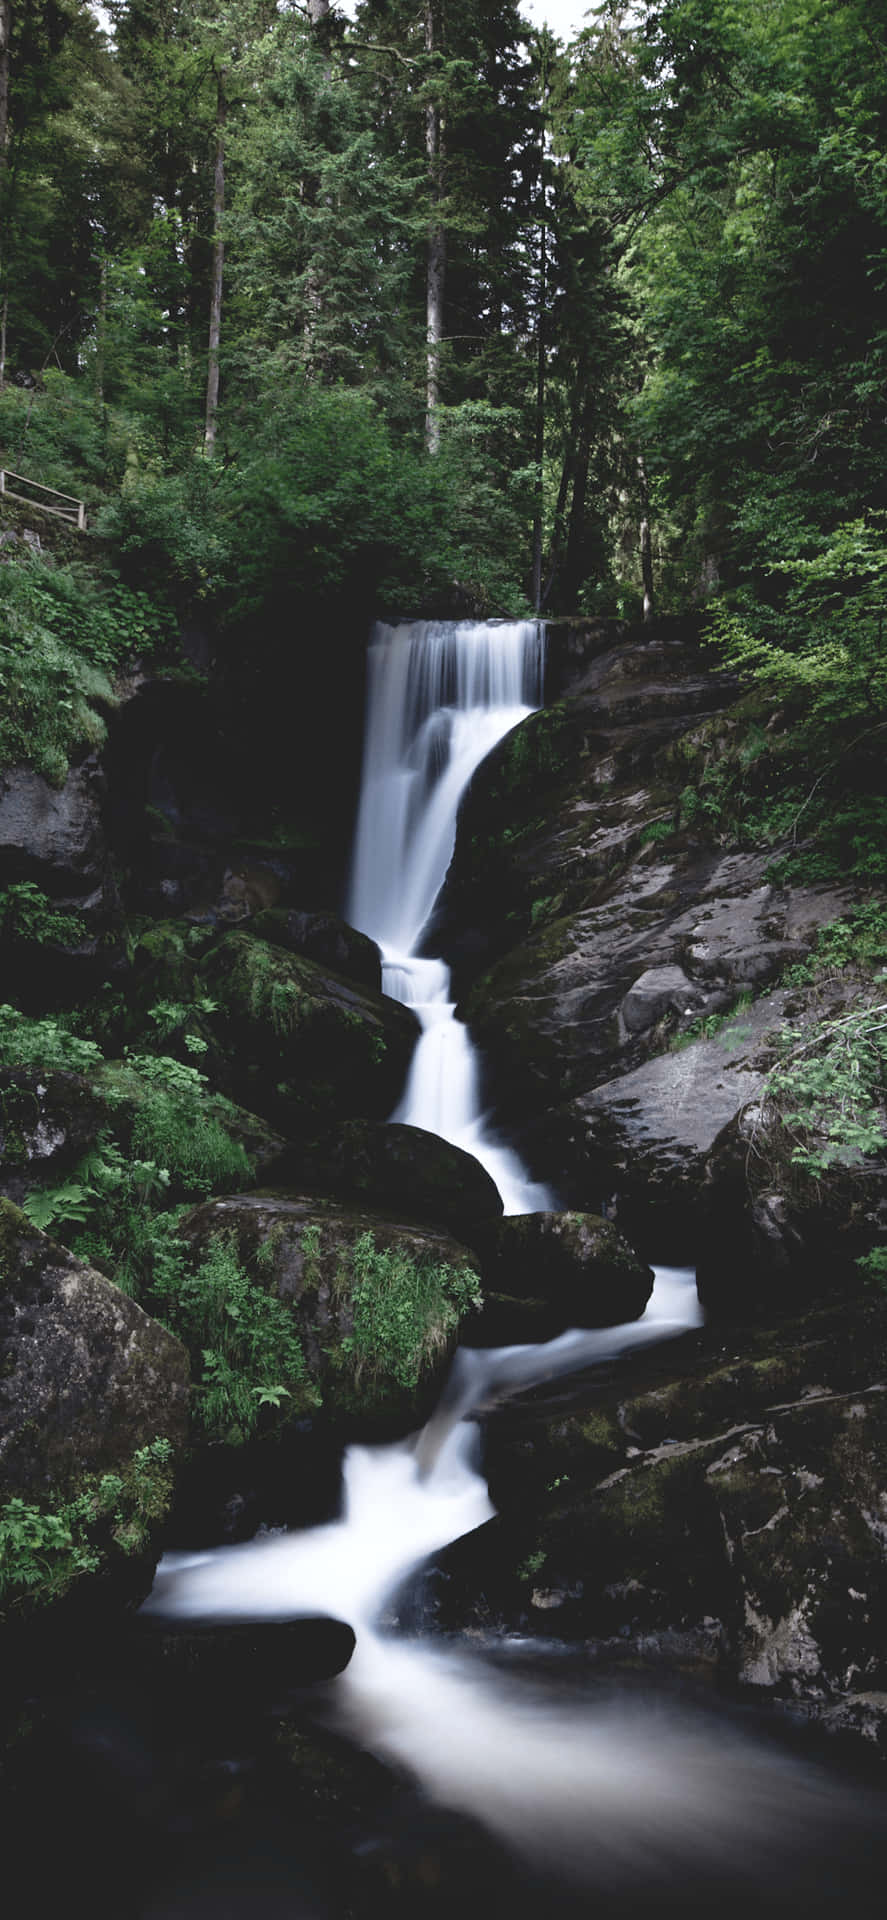 A spectacular waterfall cascading down a mountainside Wallpaper